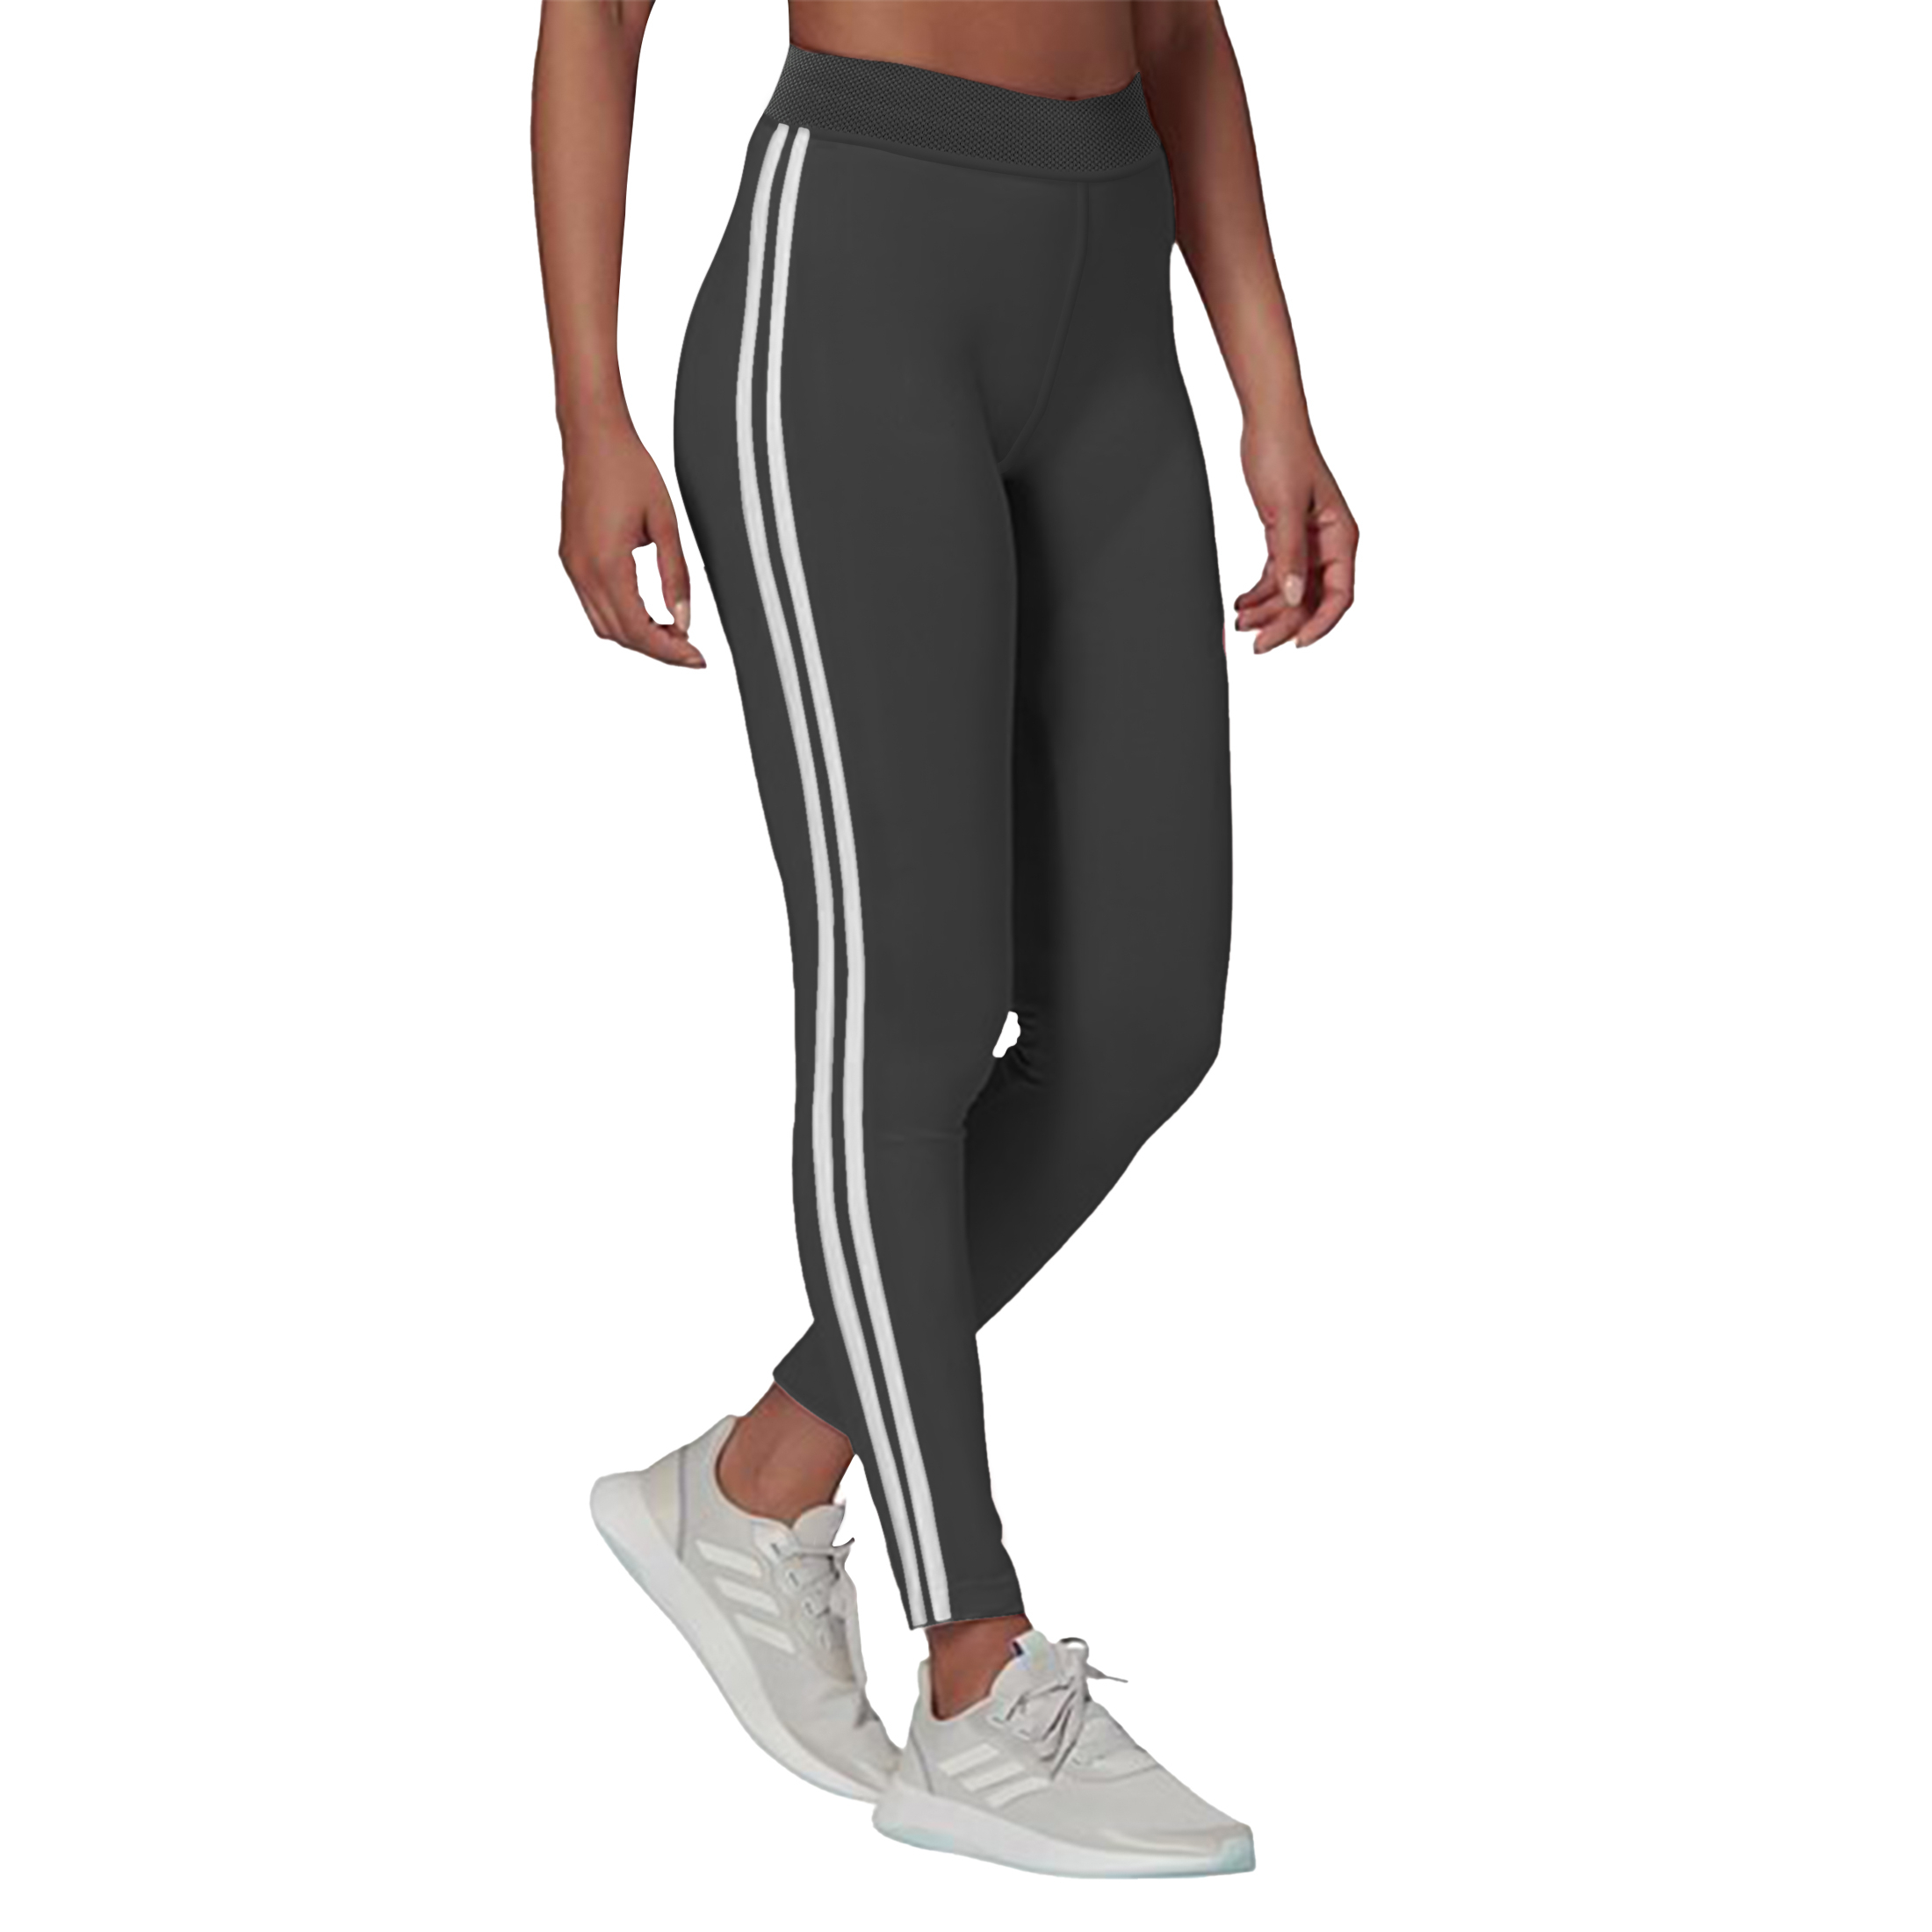 3-Pack: Women's Striped Fleece-Lined High Waisted Workout Yoga Leggings - Small/Medium